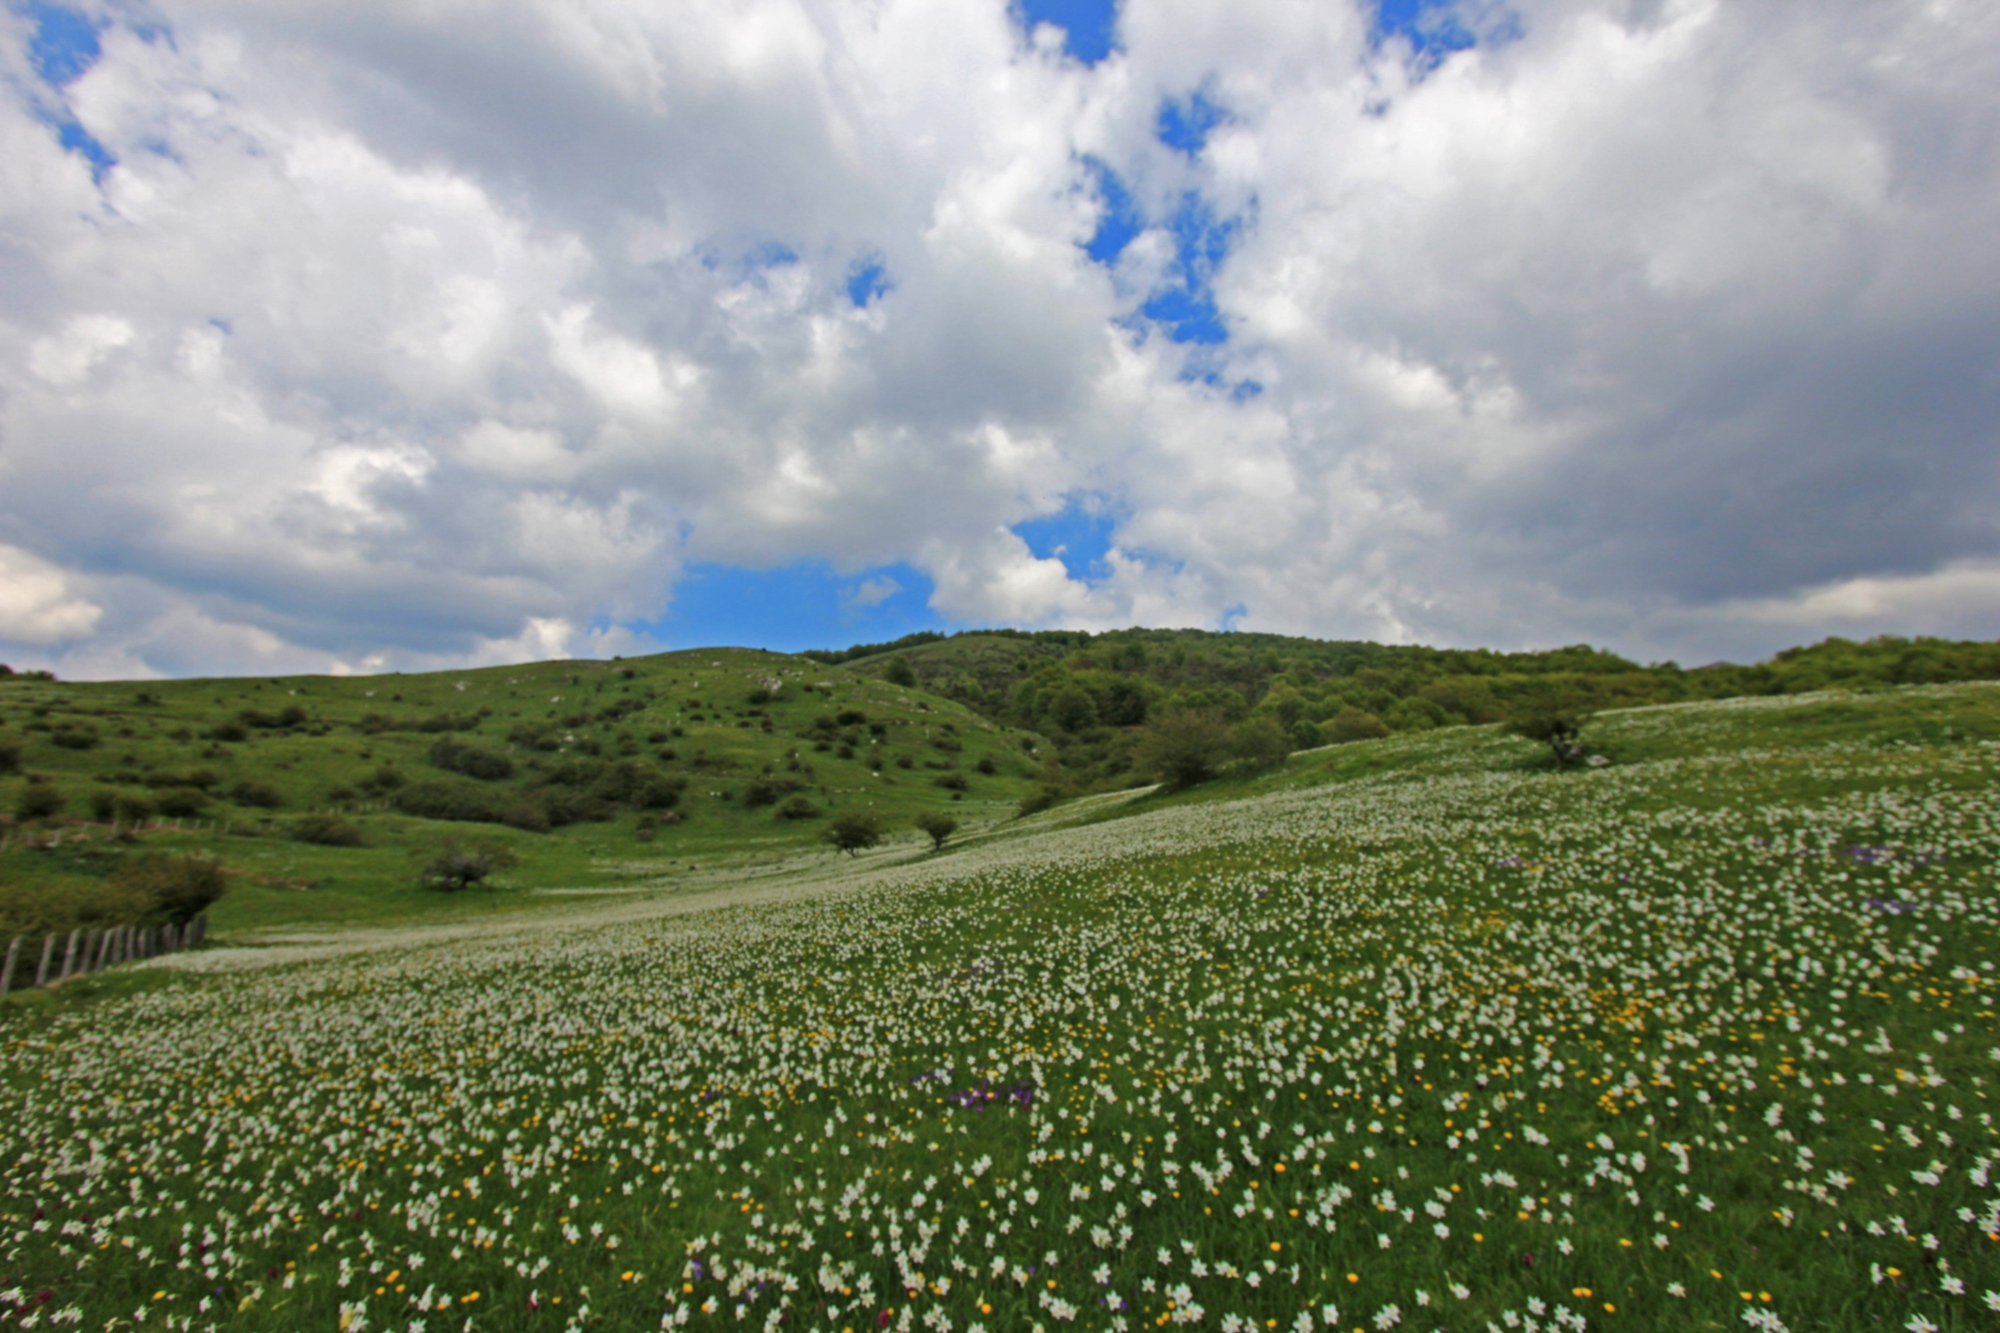 The Logarghena meadows